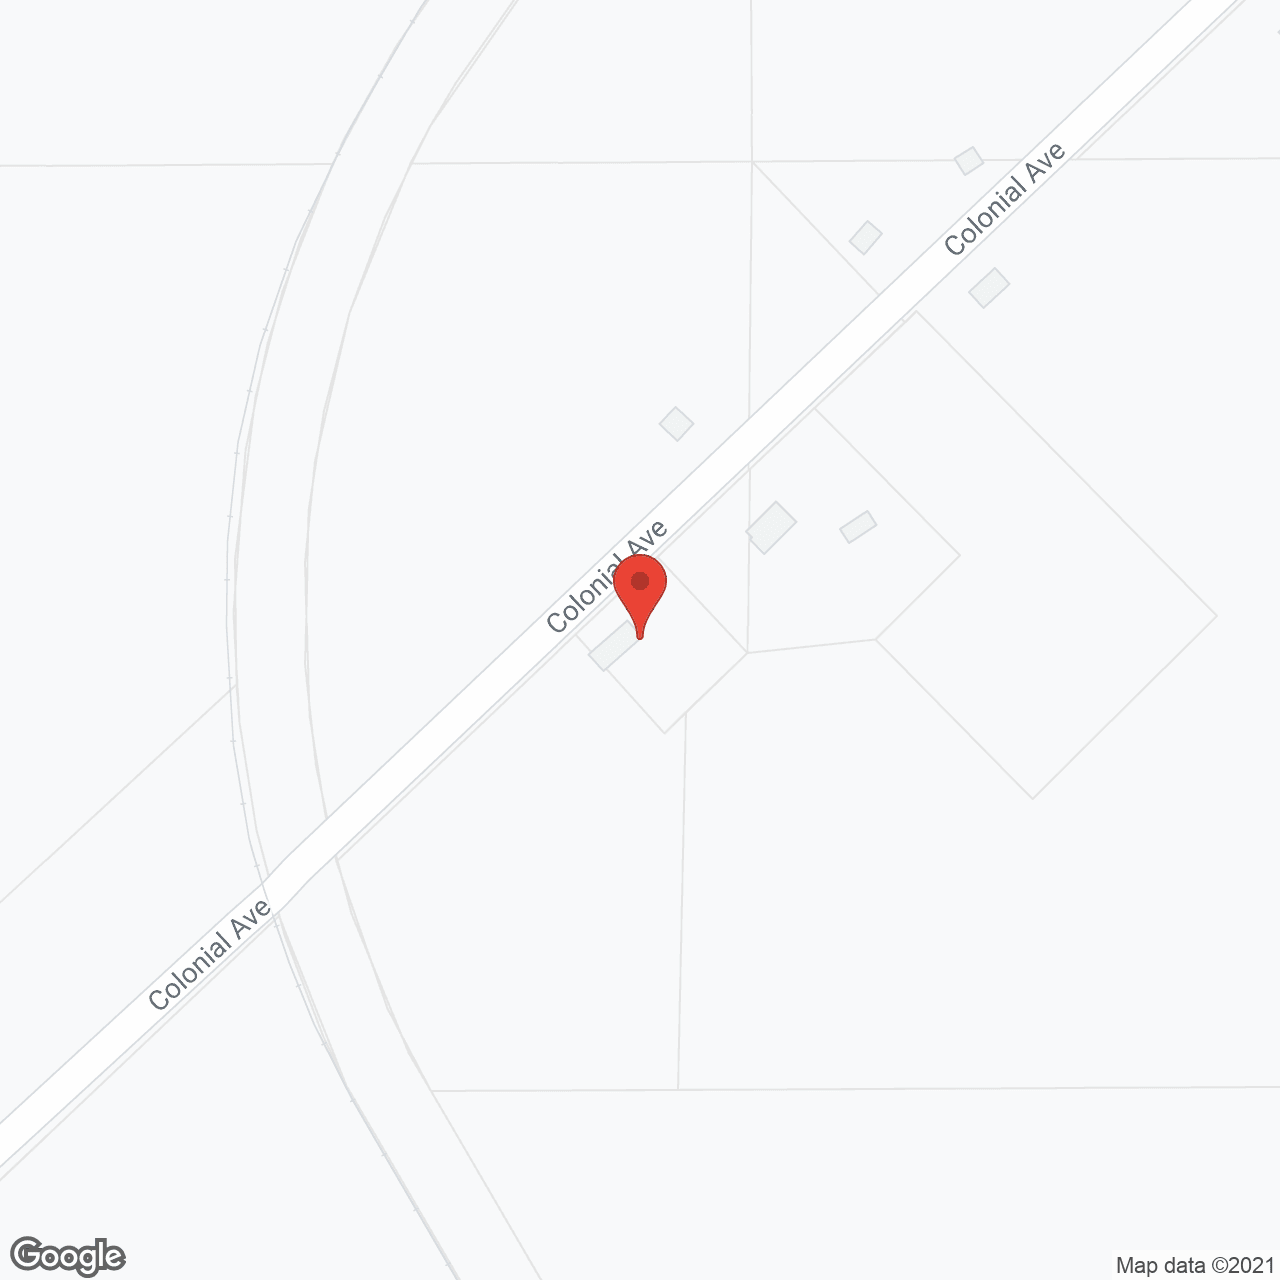 Aegin Place of West Michigan in google map